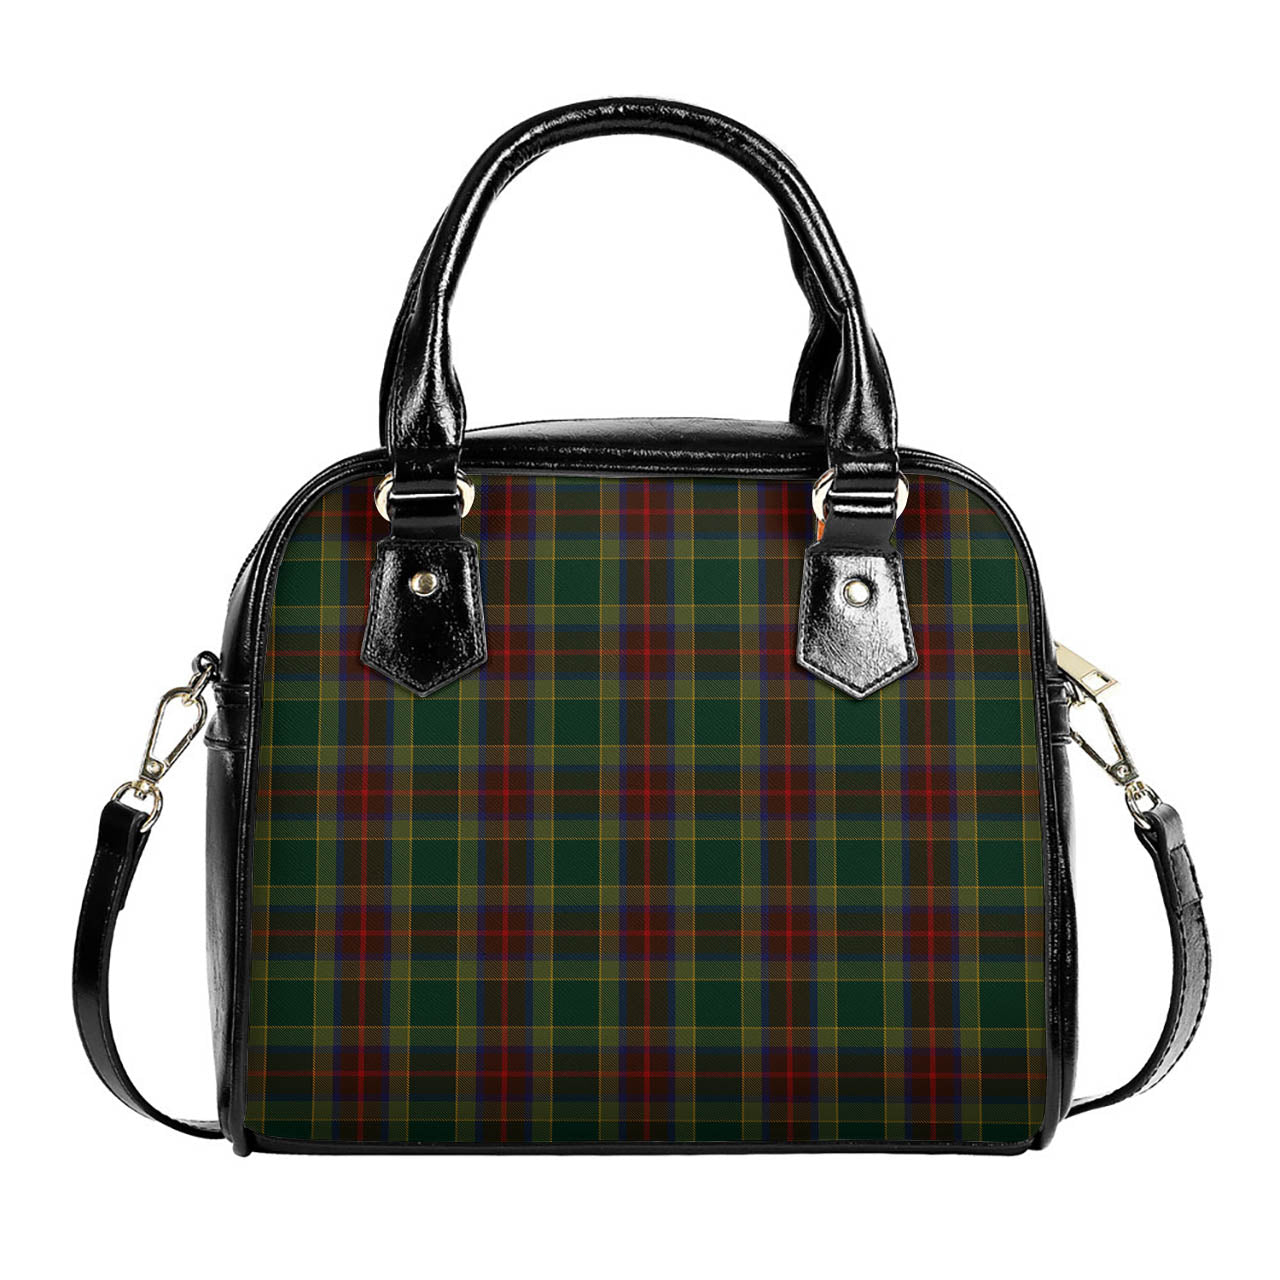 Waterford County Ireland Tartan Shoulder Handbags One Size 6*25*22 cm - Tartanvibesclothing